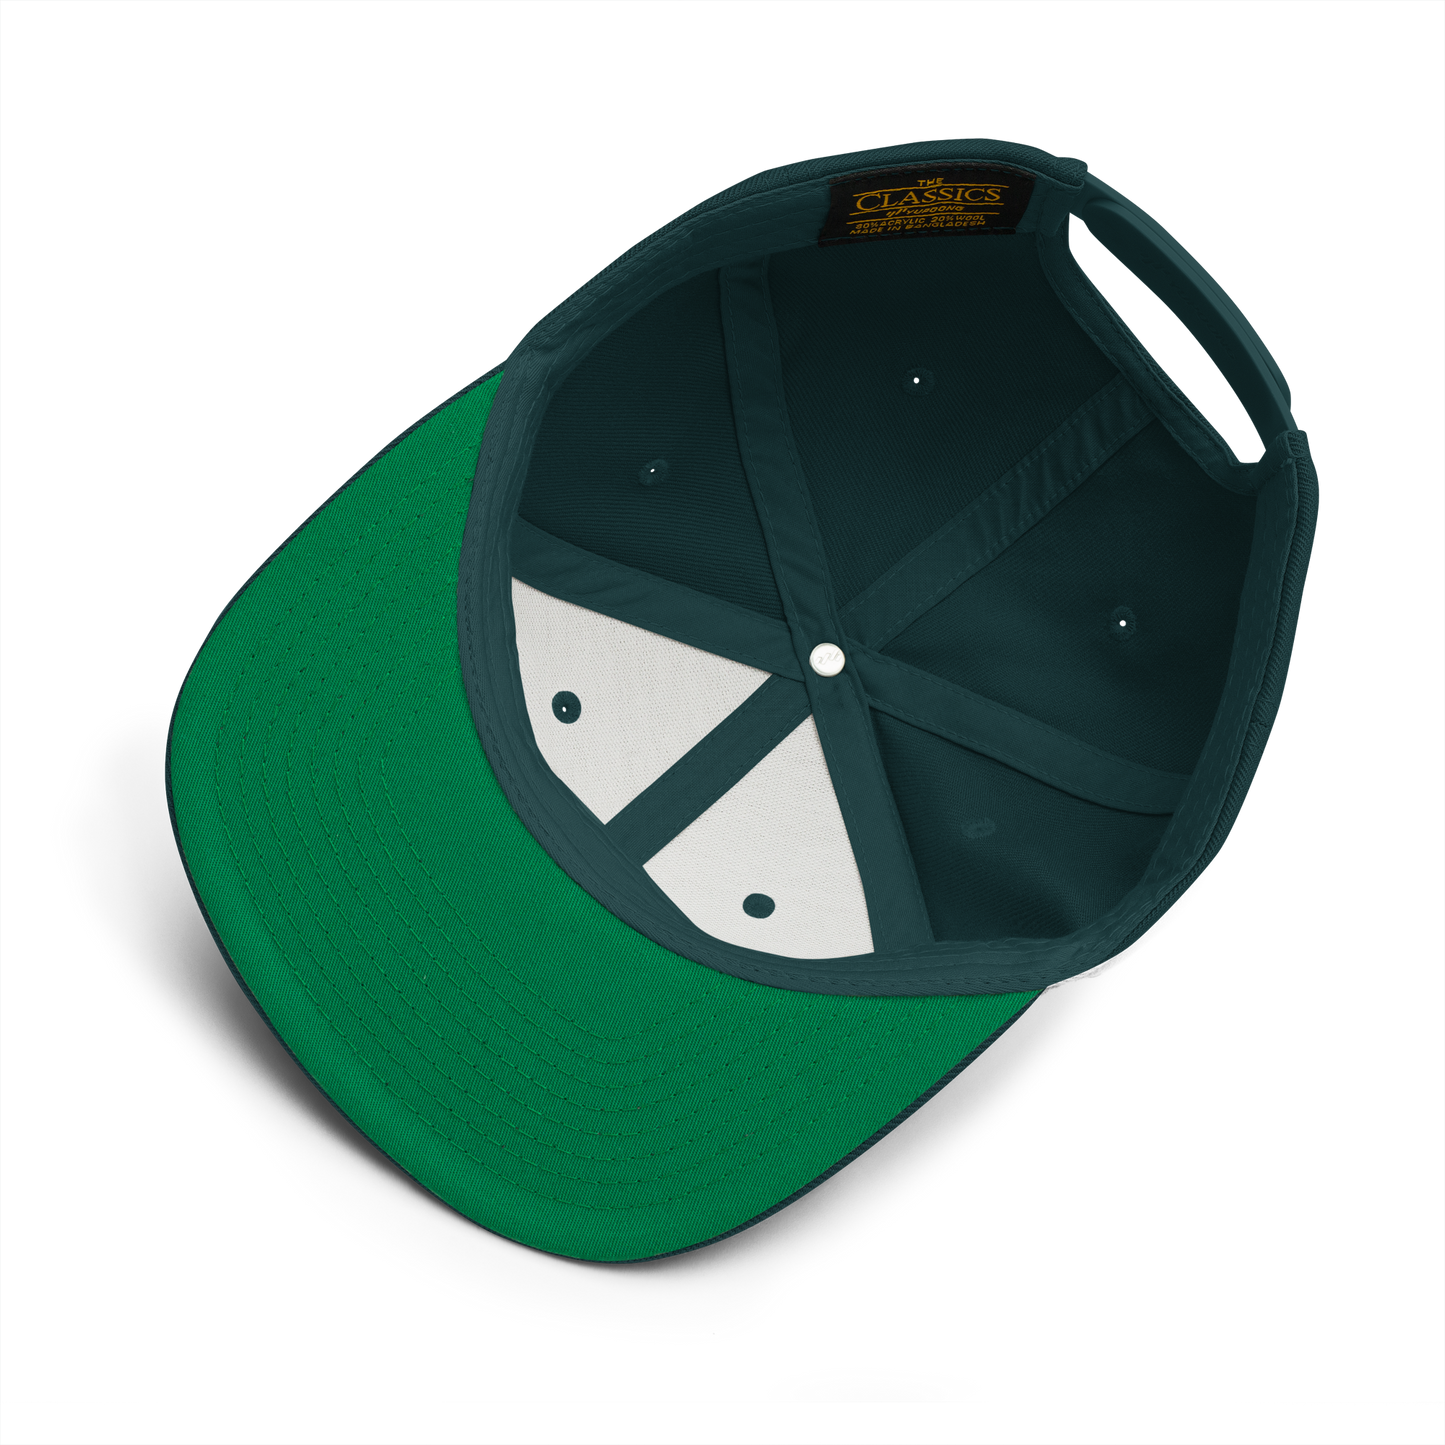 „High“ Dunkelgrüne Snapback Cap